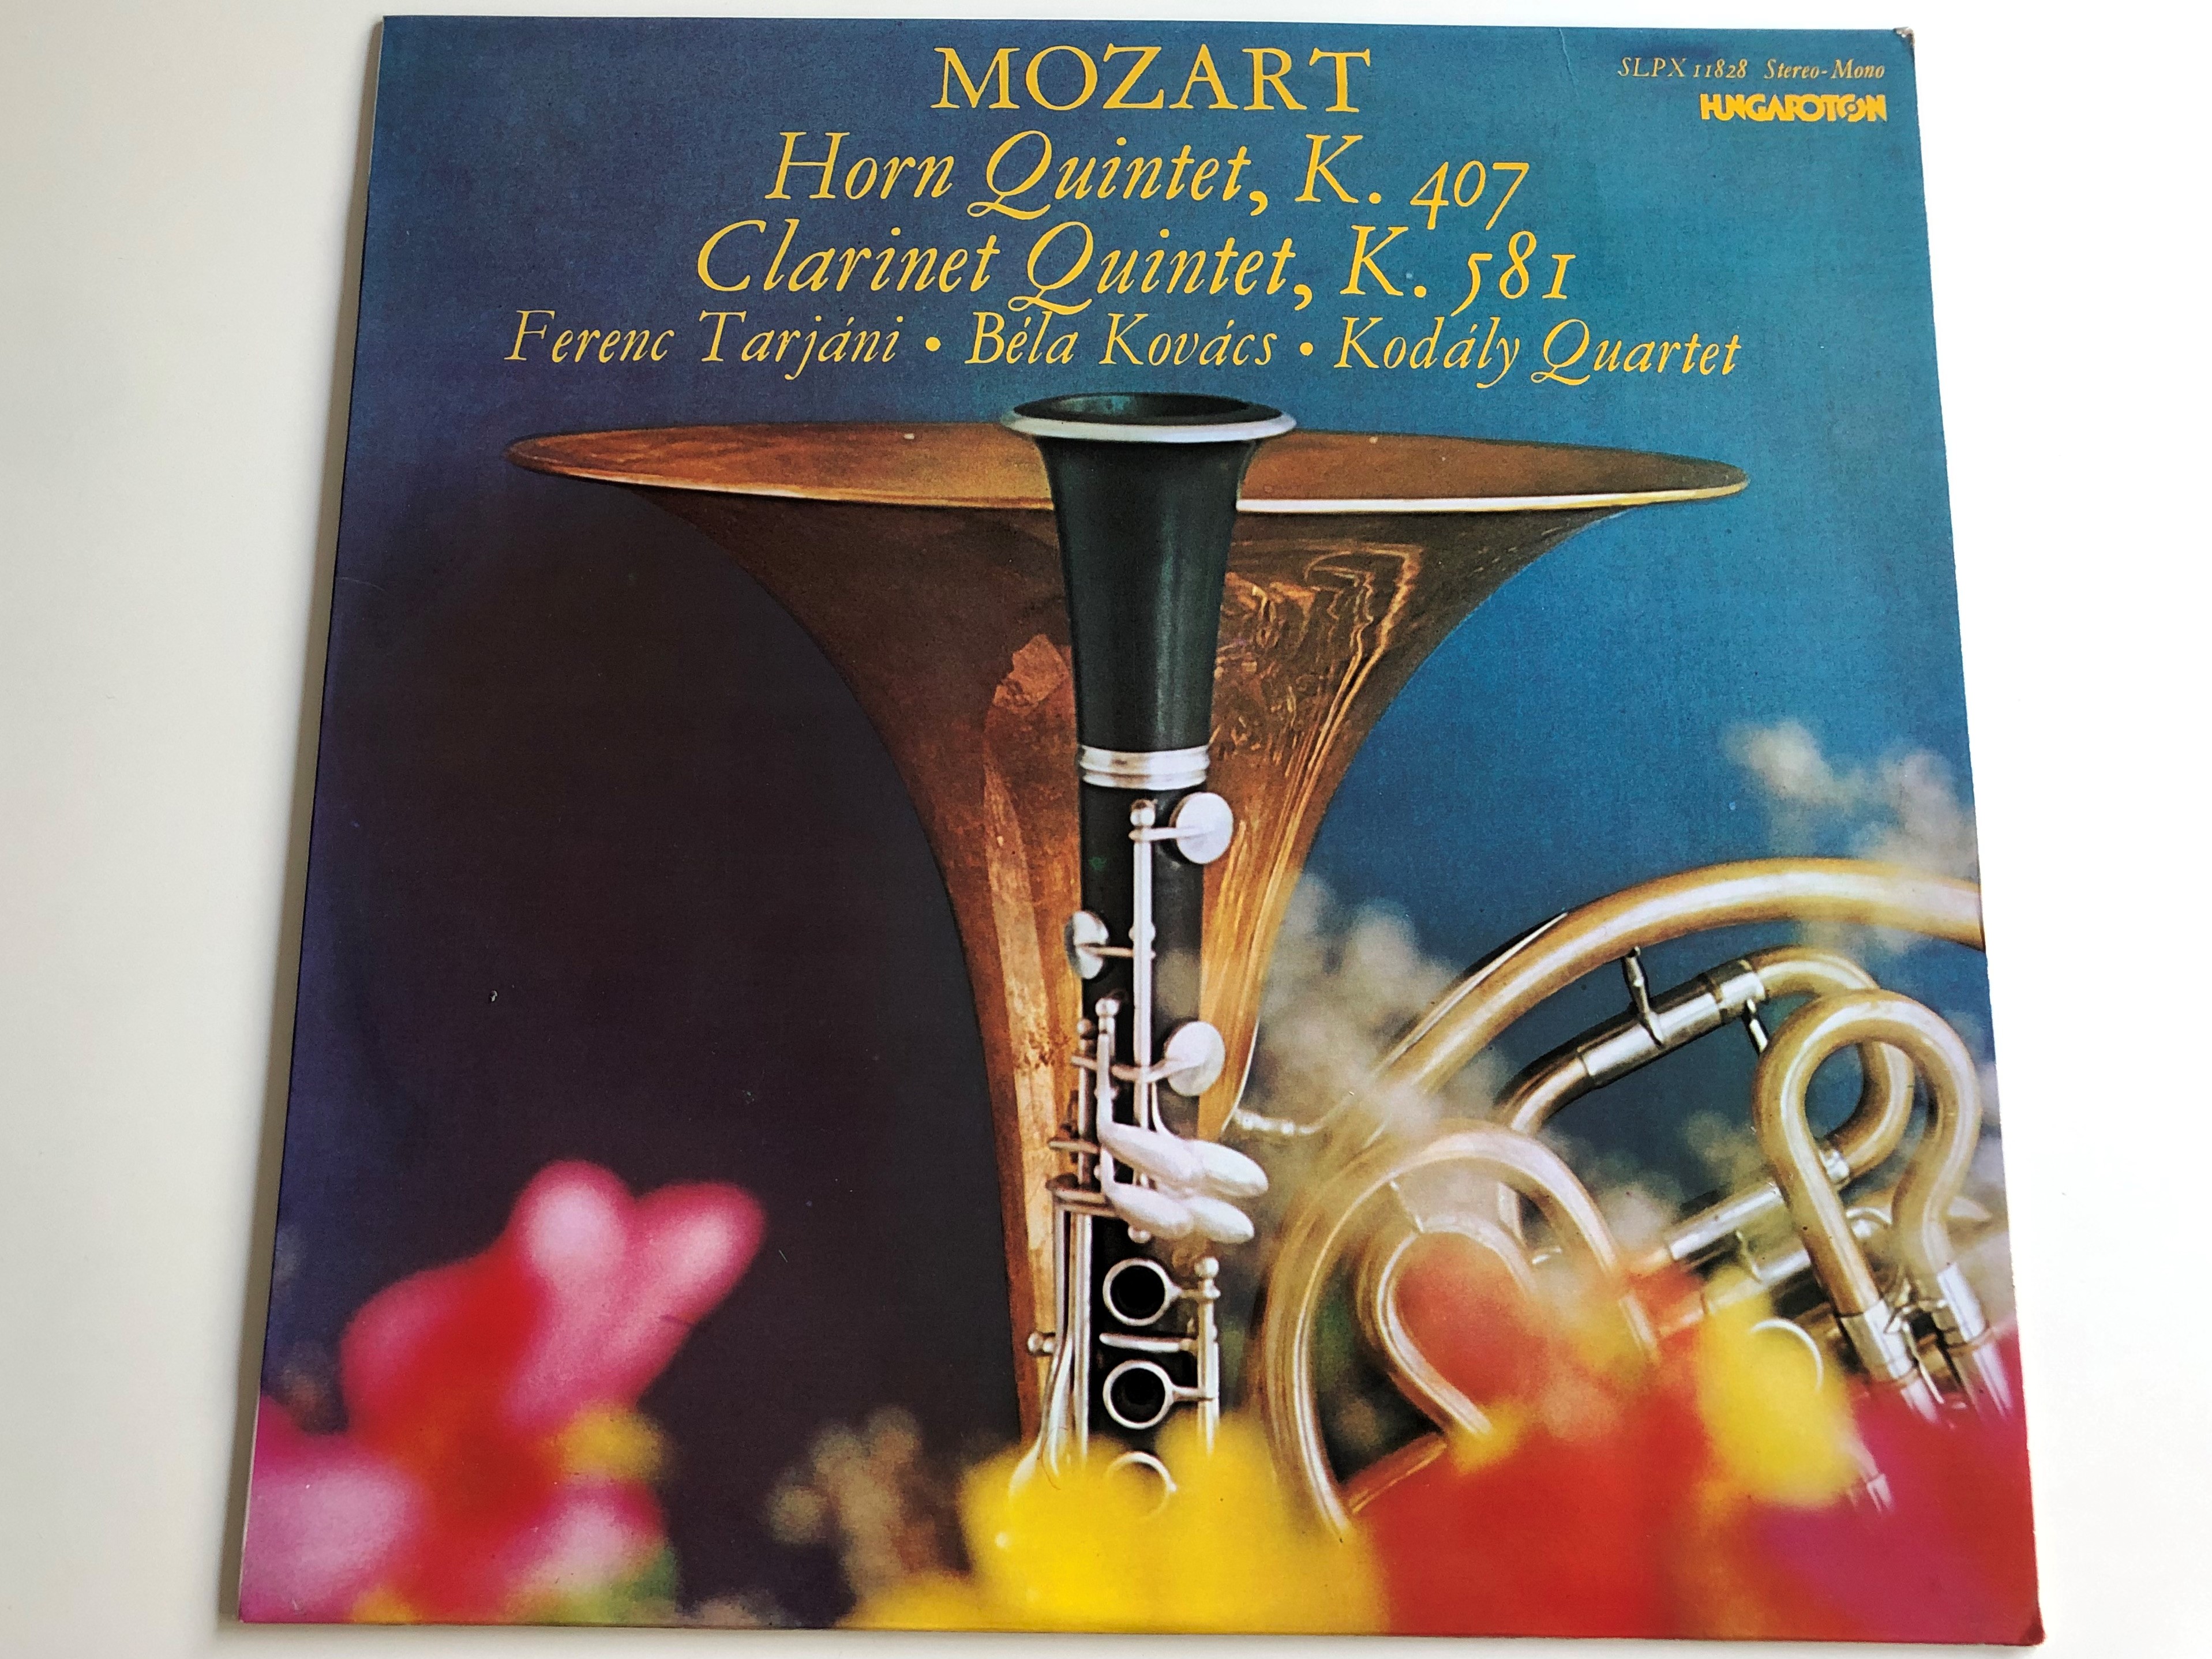 mozart-horn-quintet-k.-407-clarinet-quintet-k.581-horn-ferenc-tarjani-clarinet-bela-kovacs-ensemble-kodaly-quartet-hungaroton-lp-stereo-mono-slpx-11828-1-.jpg